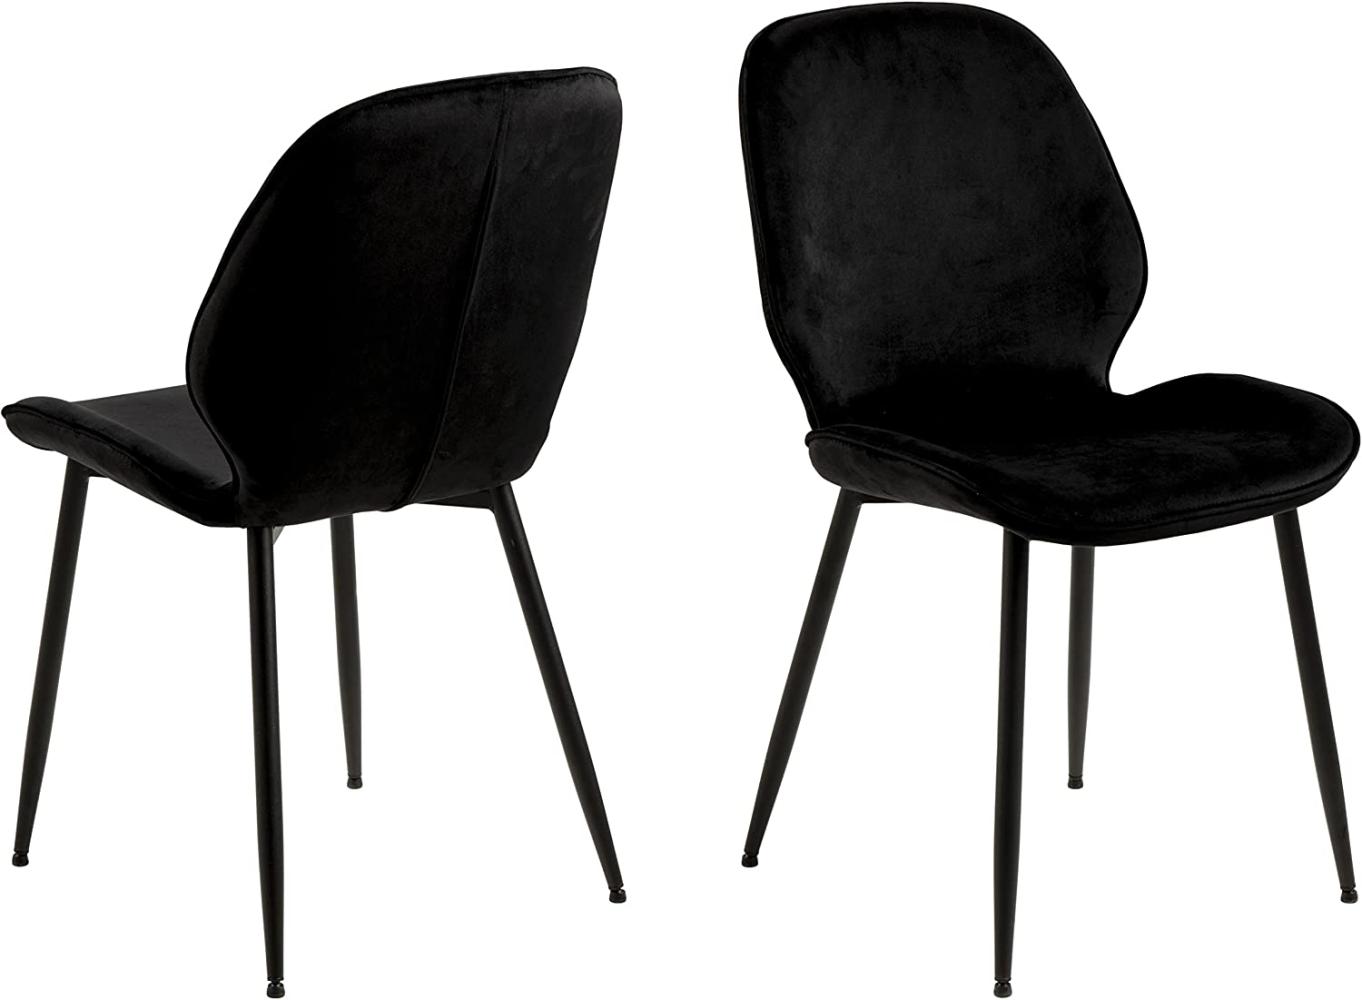 AC Design Furniture Filippa Esszimmerstuhl, H: 85 x B: 47,5 x T: 57,5 cm, Schwarz, Stoff/Metall, 2 Stk. Bild 1